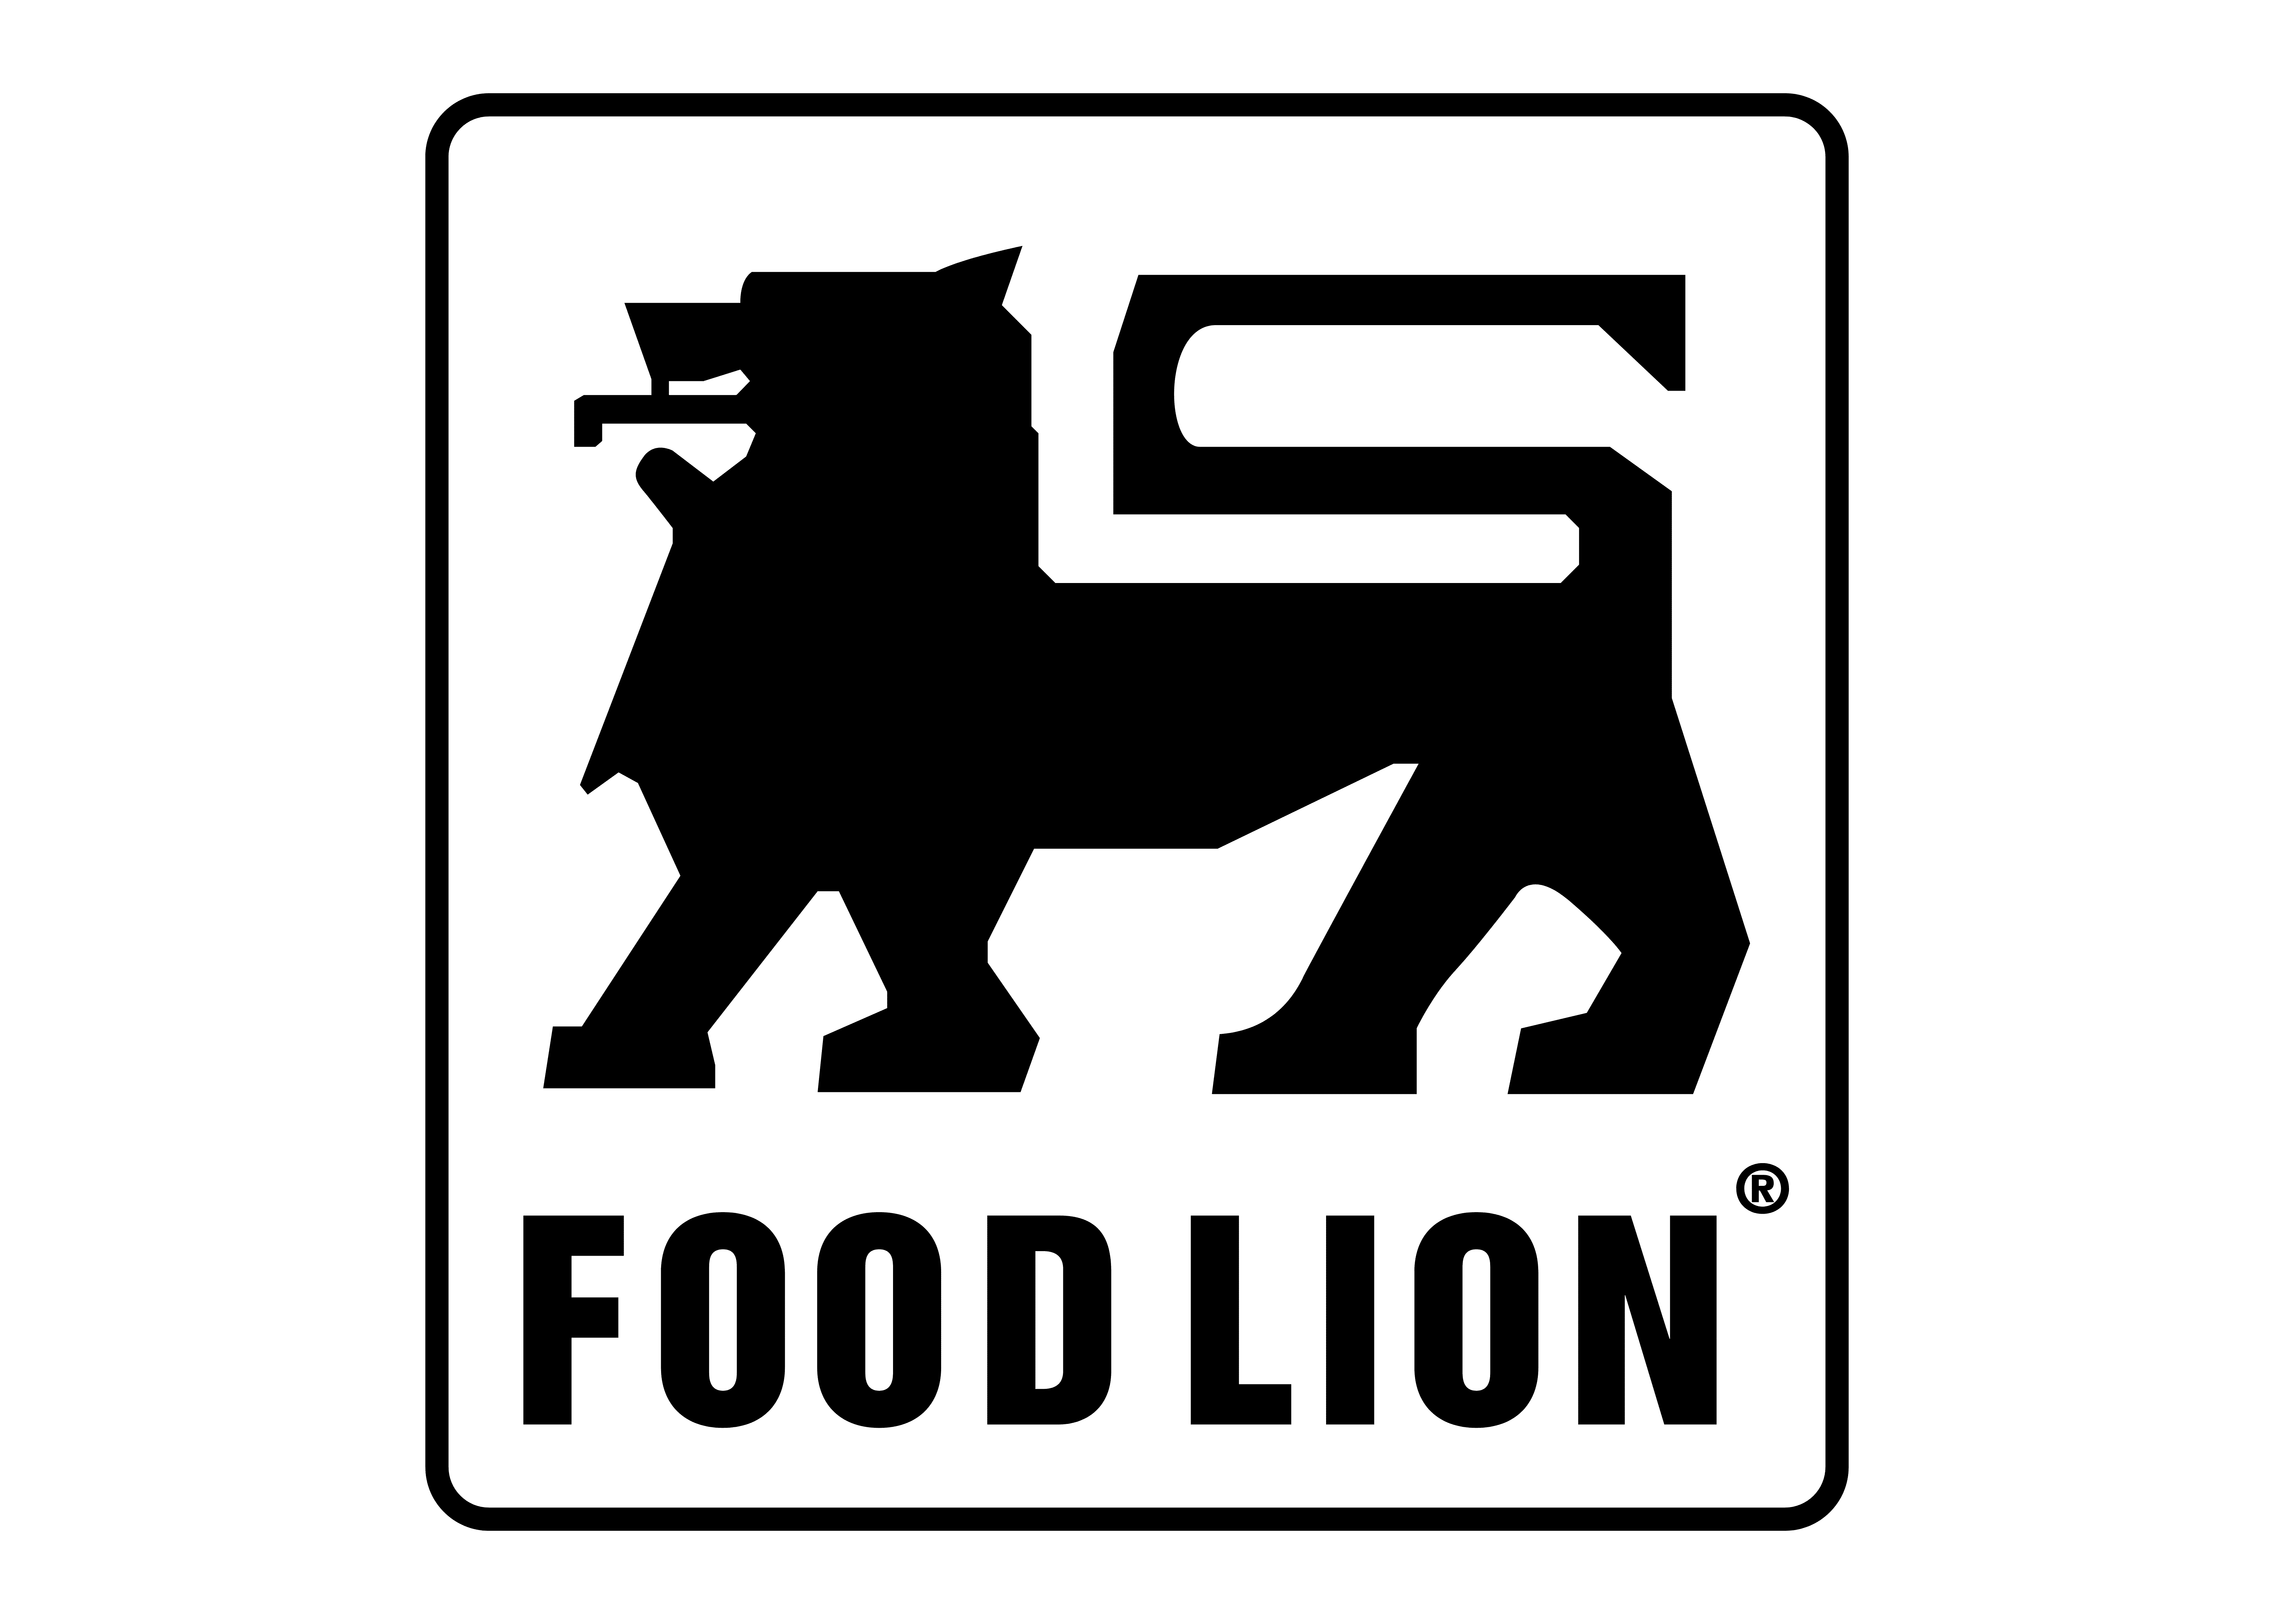 food lion logo history